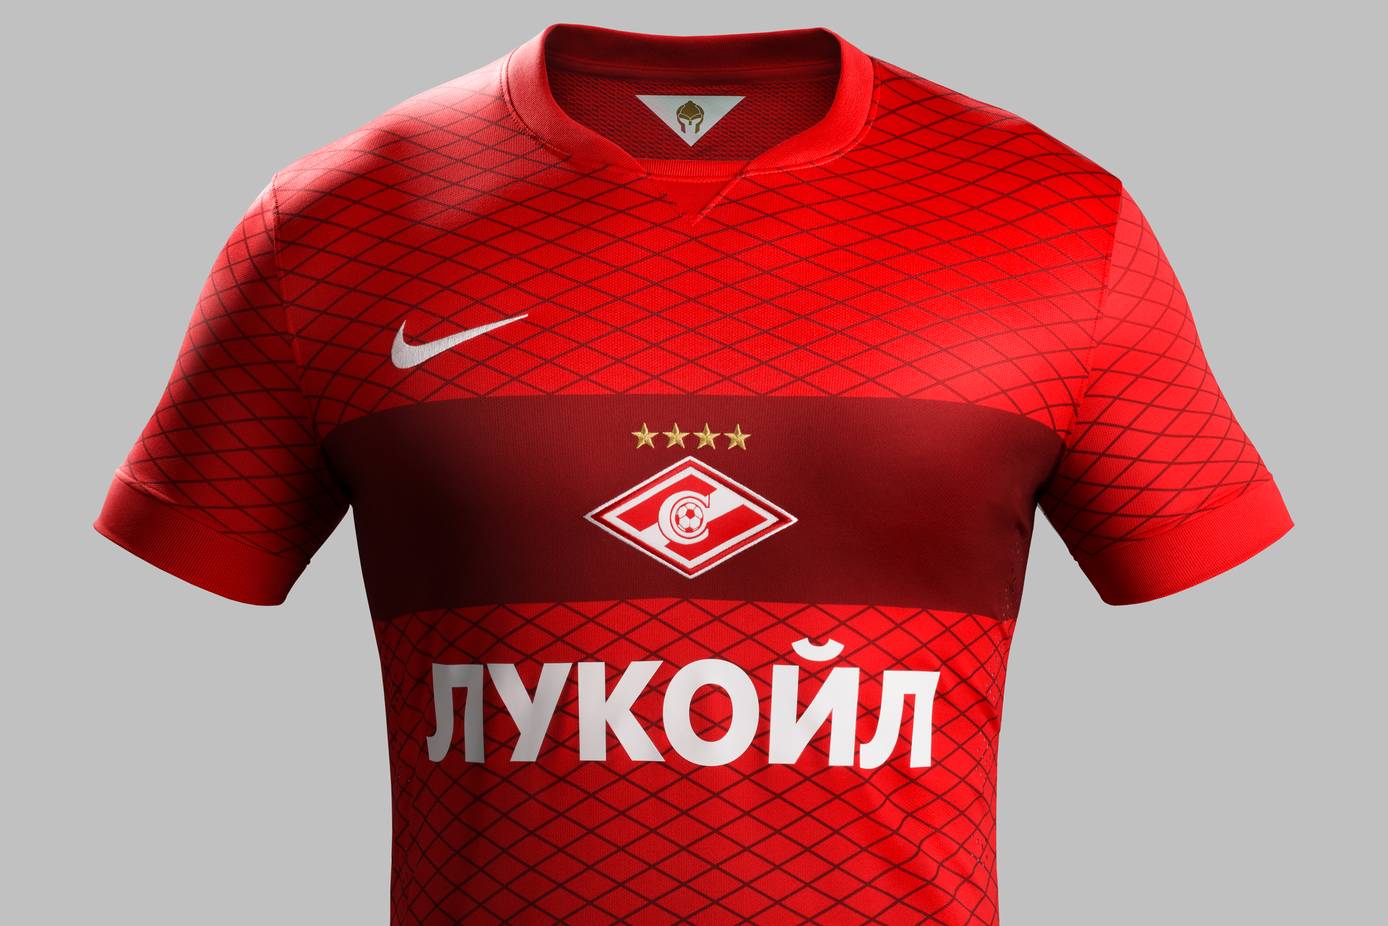 Russia edition: spartak Moscow x Nike Away - FIFA Kit Creator Showcase